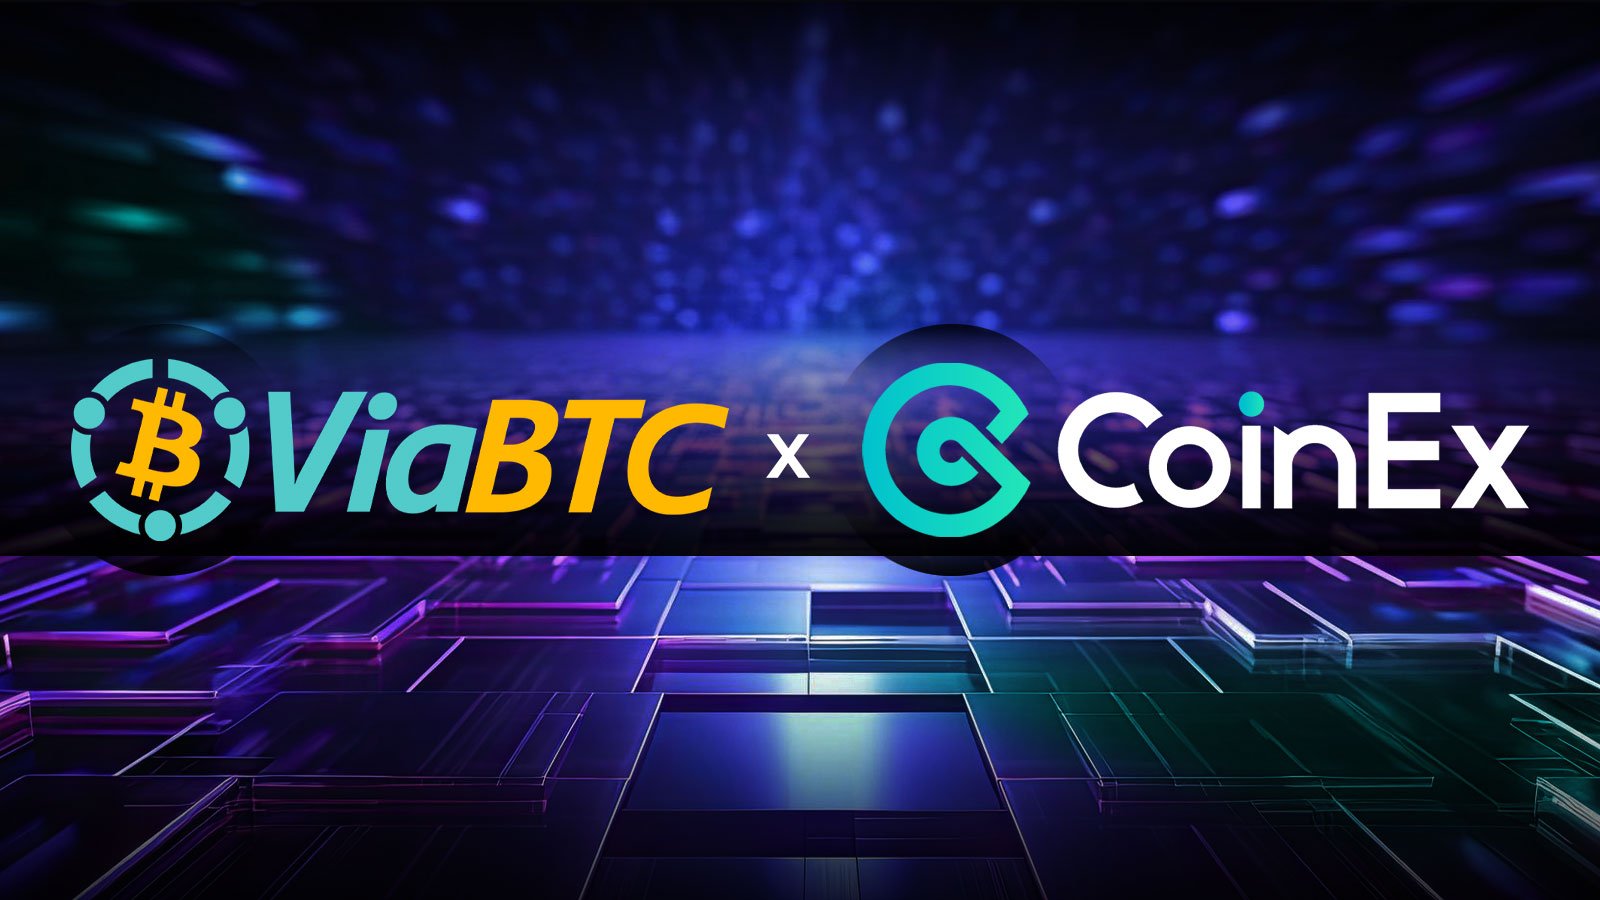 ViaBTC×CoinEx Co-Sponsor Token 2049 Dubai as a Testament to Its Commitment to Fostering Global Crypto Adoption